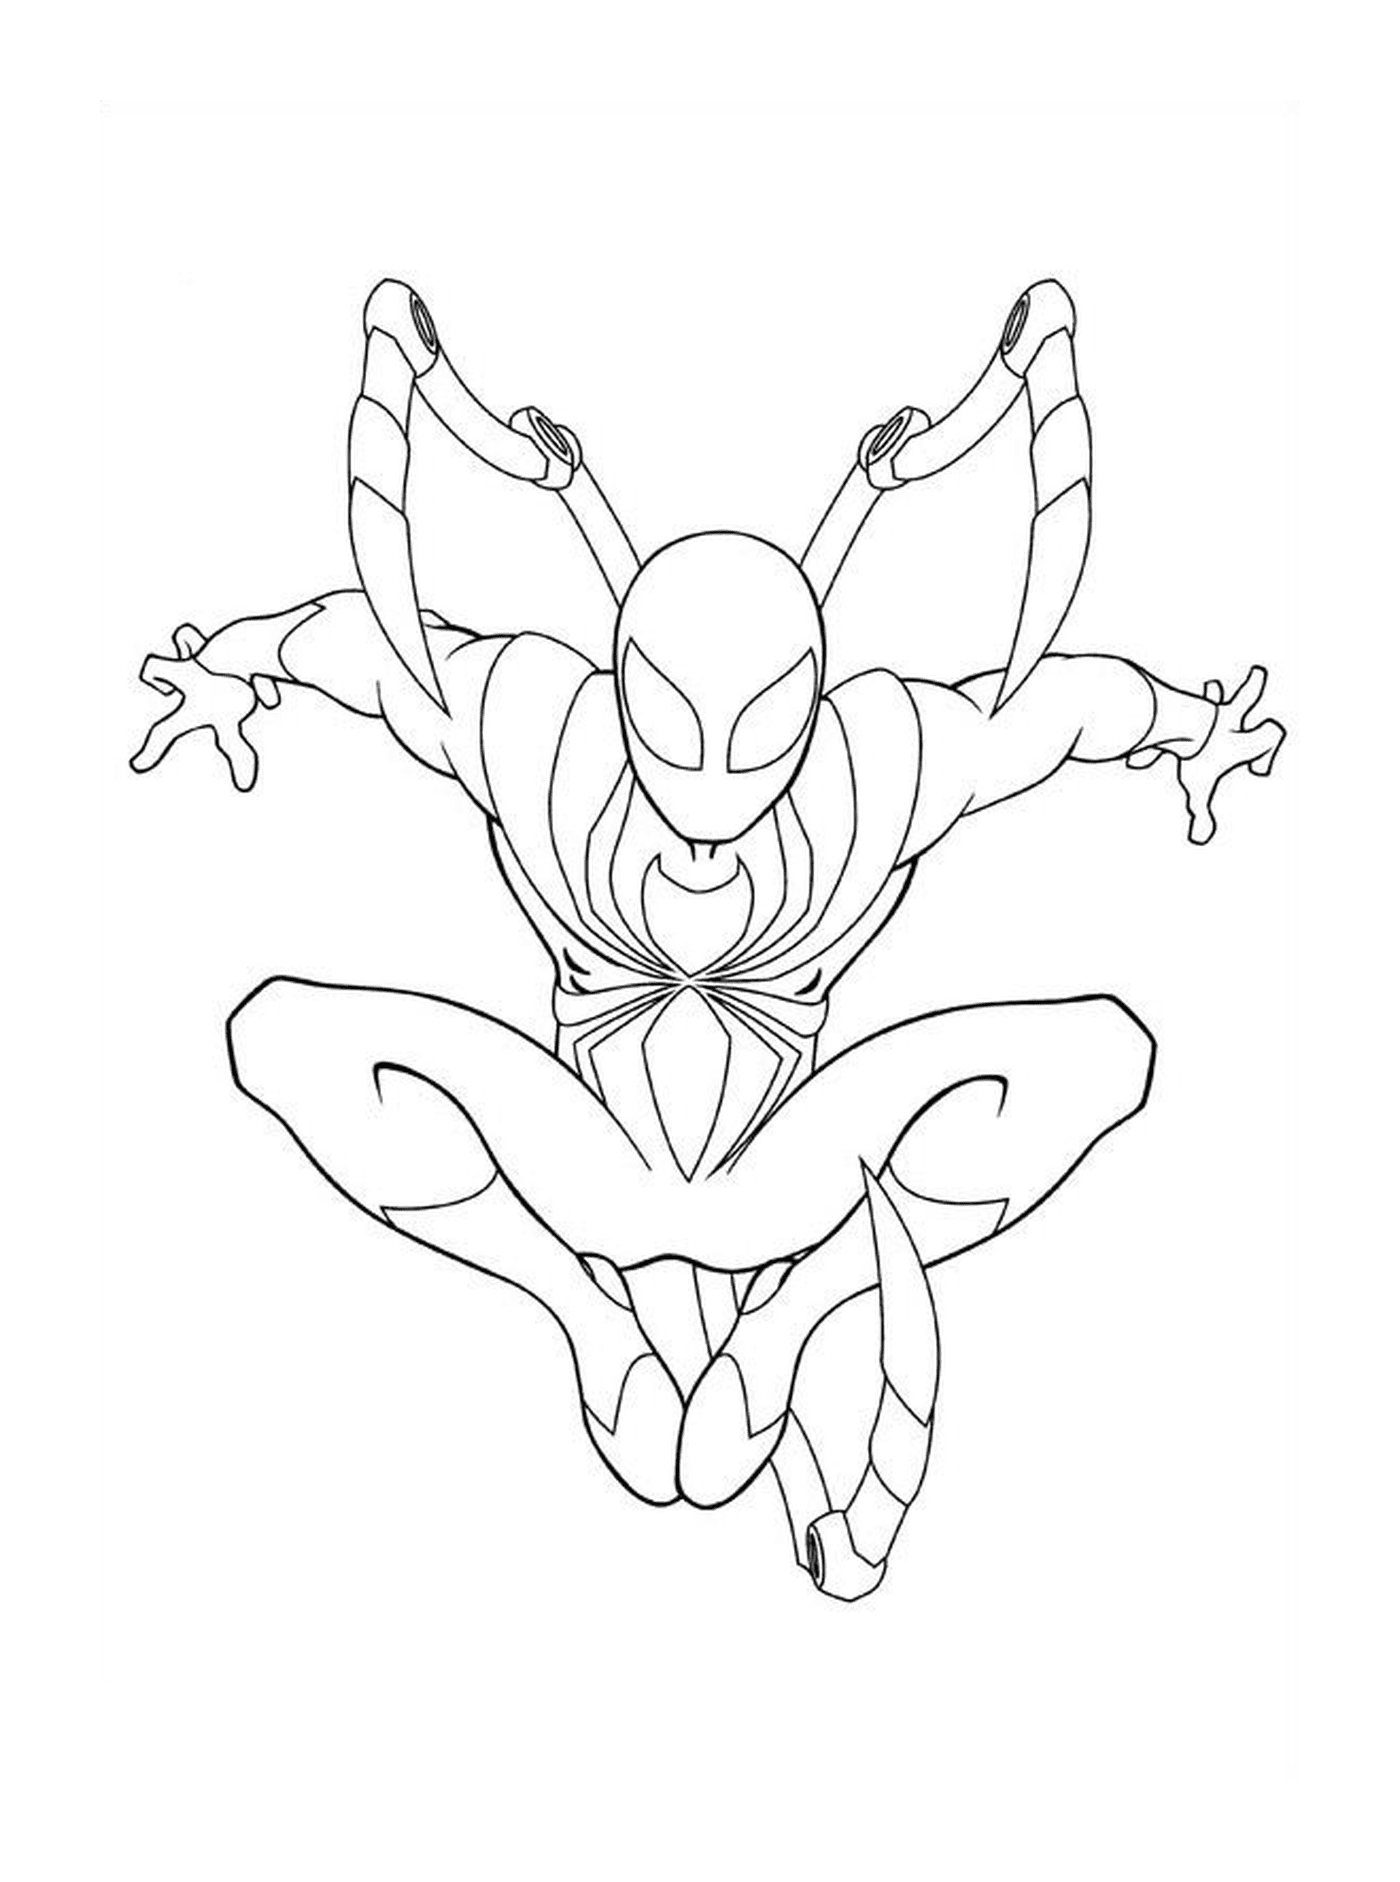  Человек-паук со своим железным костюмом 